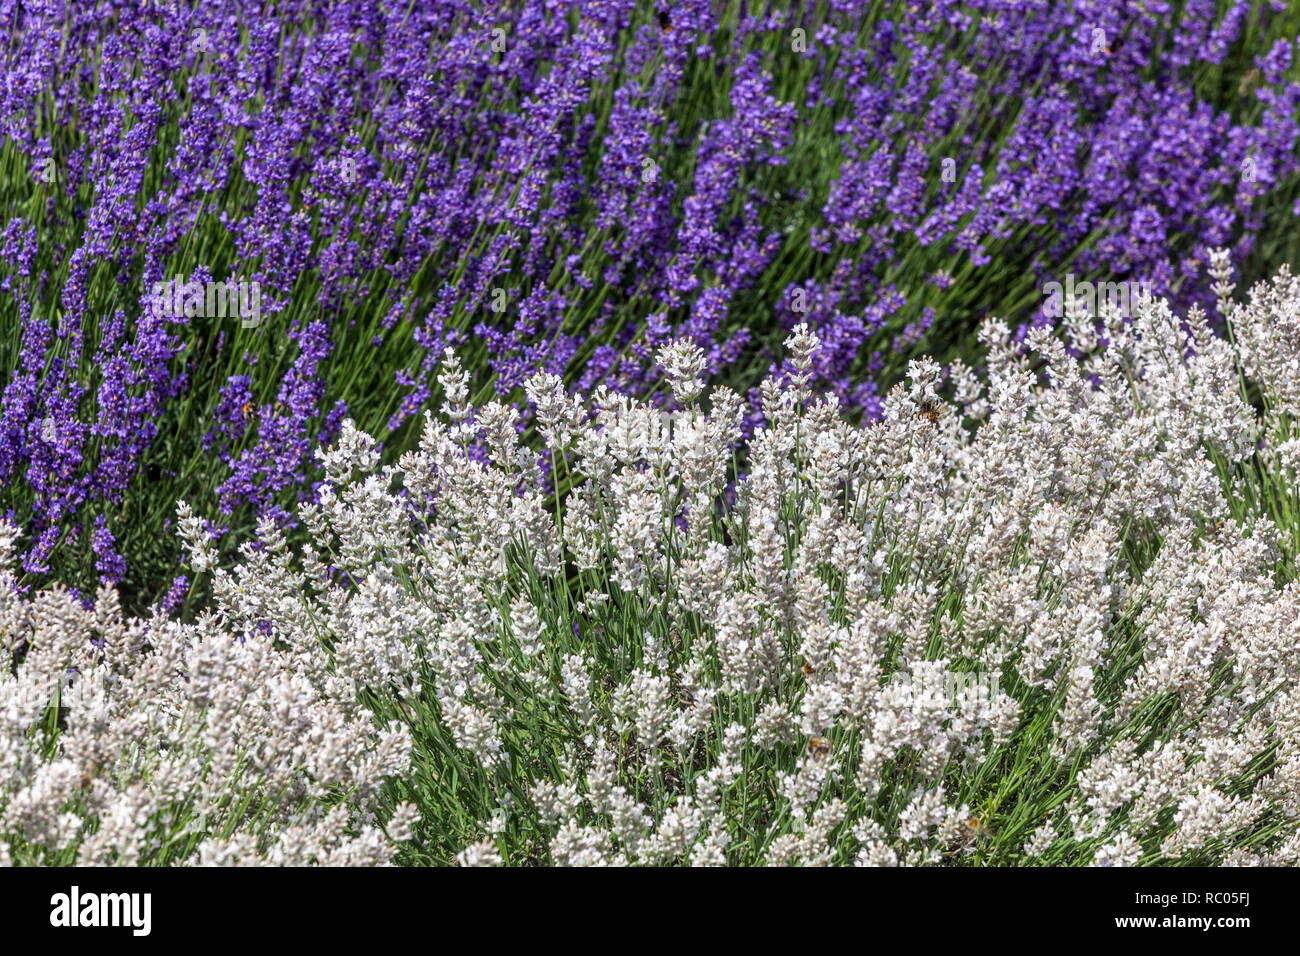 White lavender, Lavandula angustifolia 'Sentivia Silver' and Lavender 'Hidcote Blue', white garden border bee-friendly plants Stock Photo